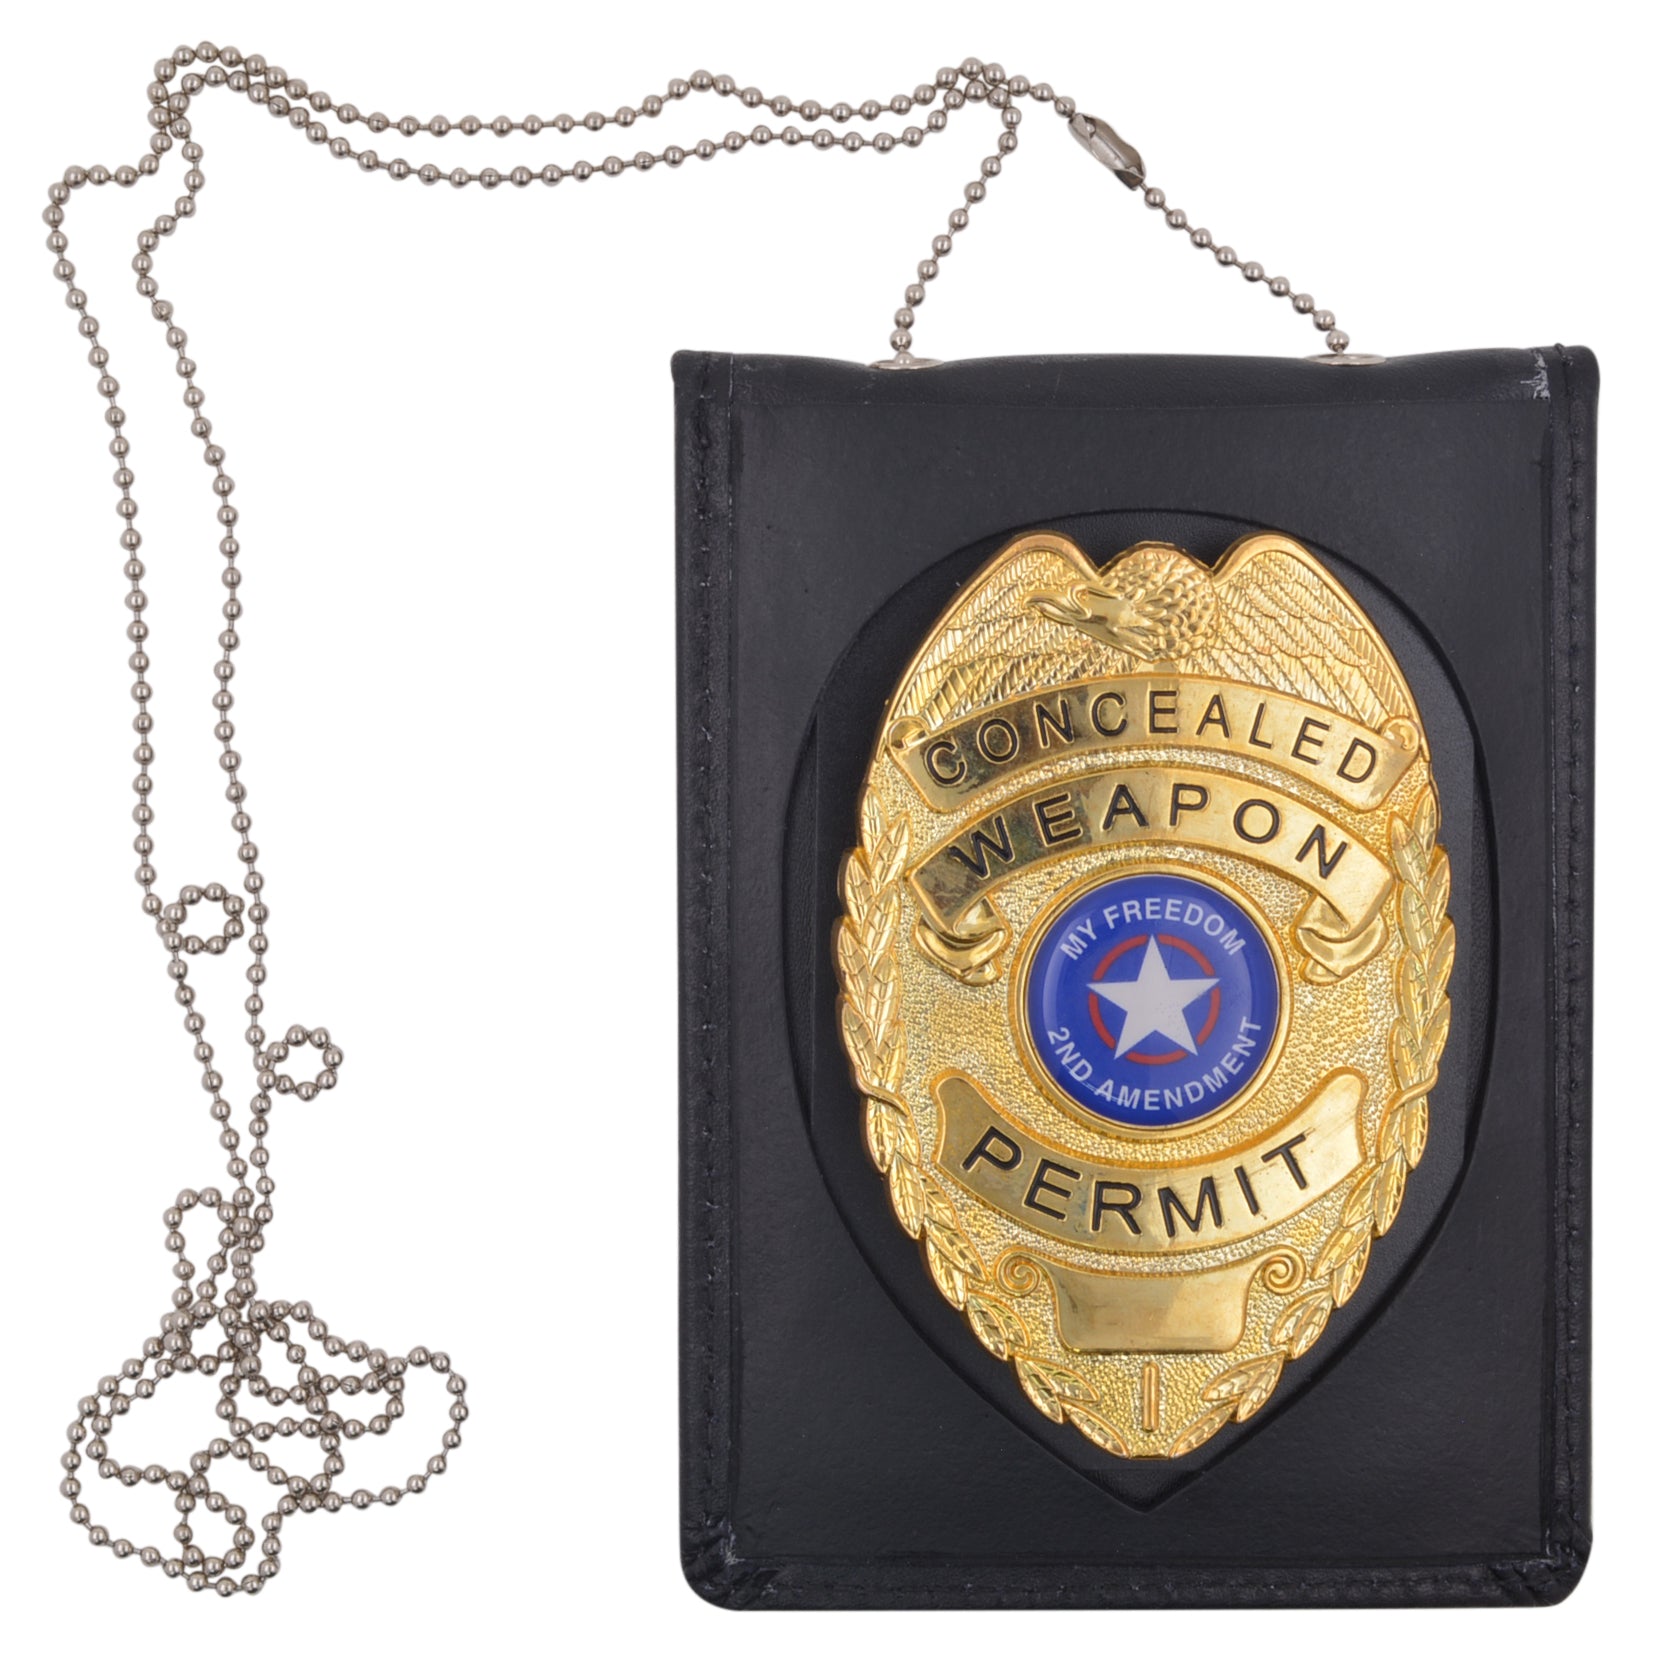 Marshal RFID Blocking Police Badge Holder Trifold Wallet